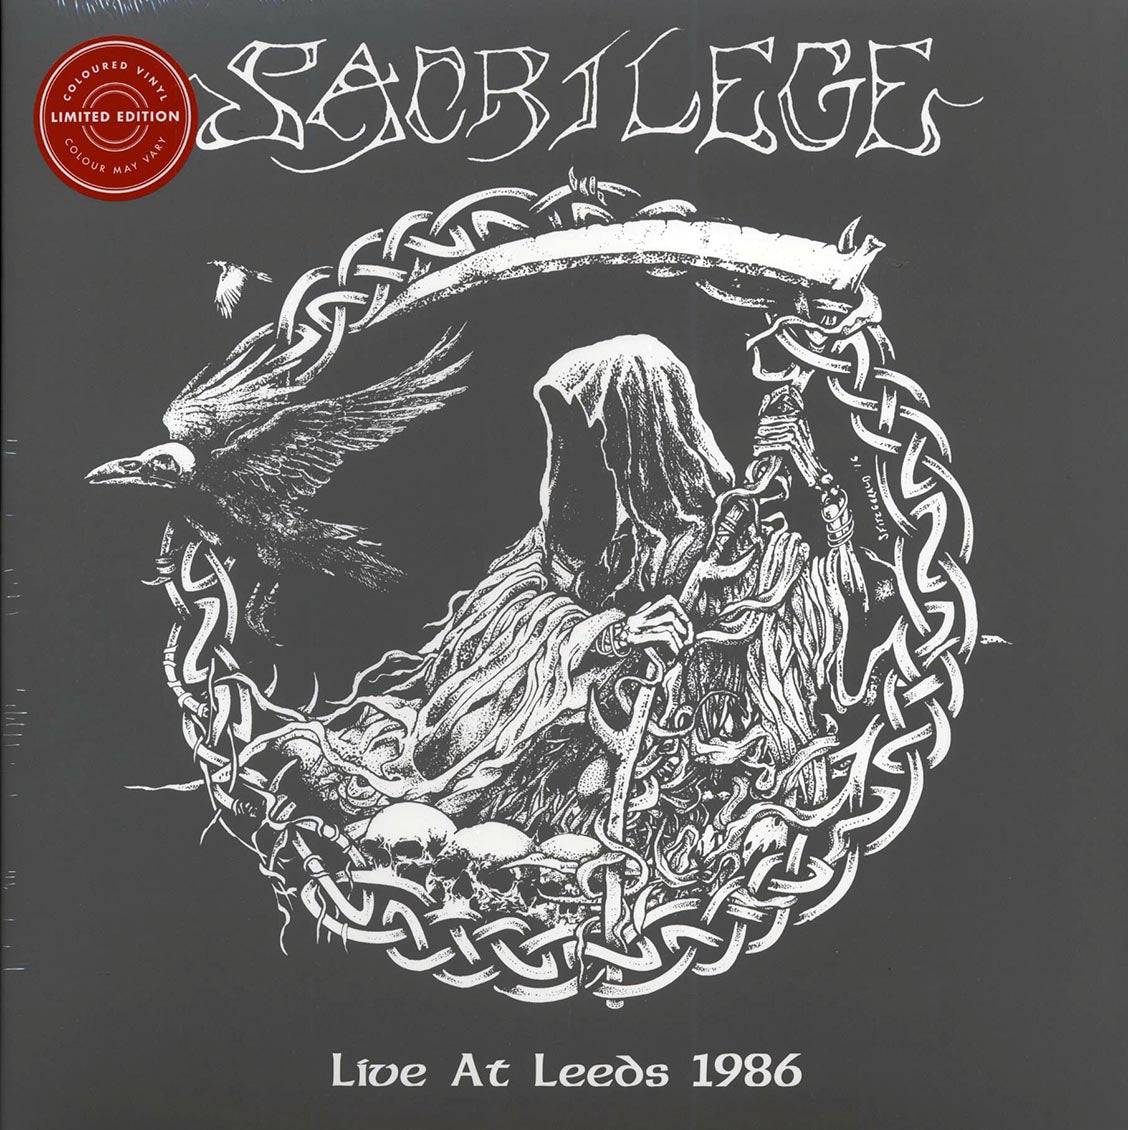 Sacrilege - Live At Leeds 1986 (ltd. ed.) (splatter vinyl) - Vinyl LP